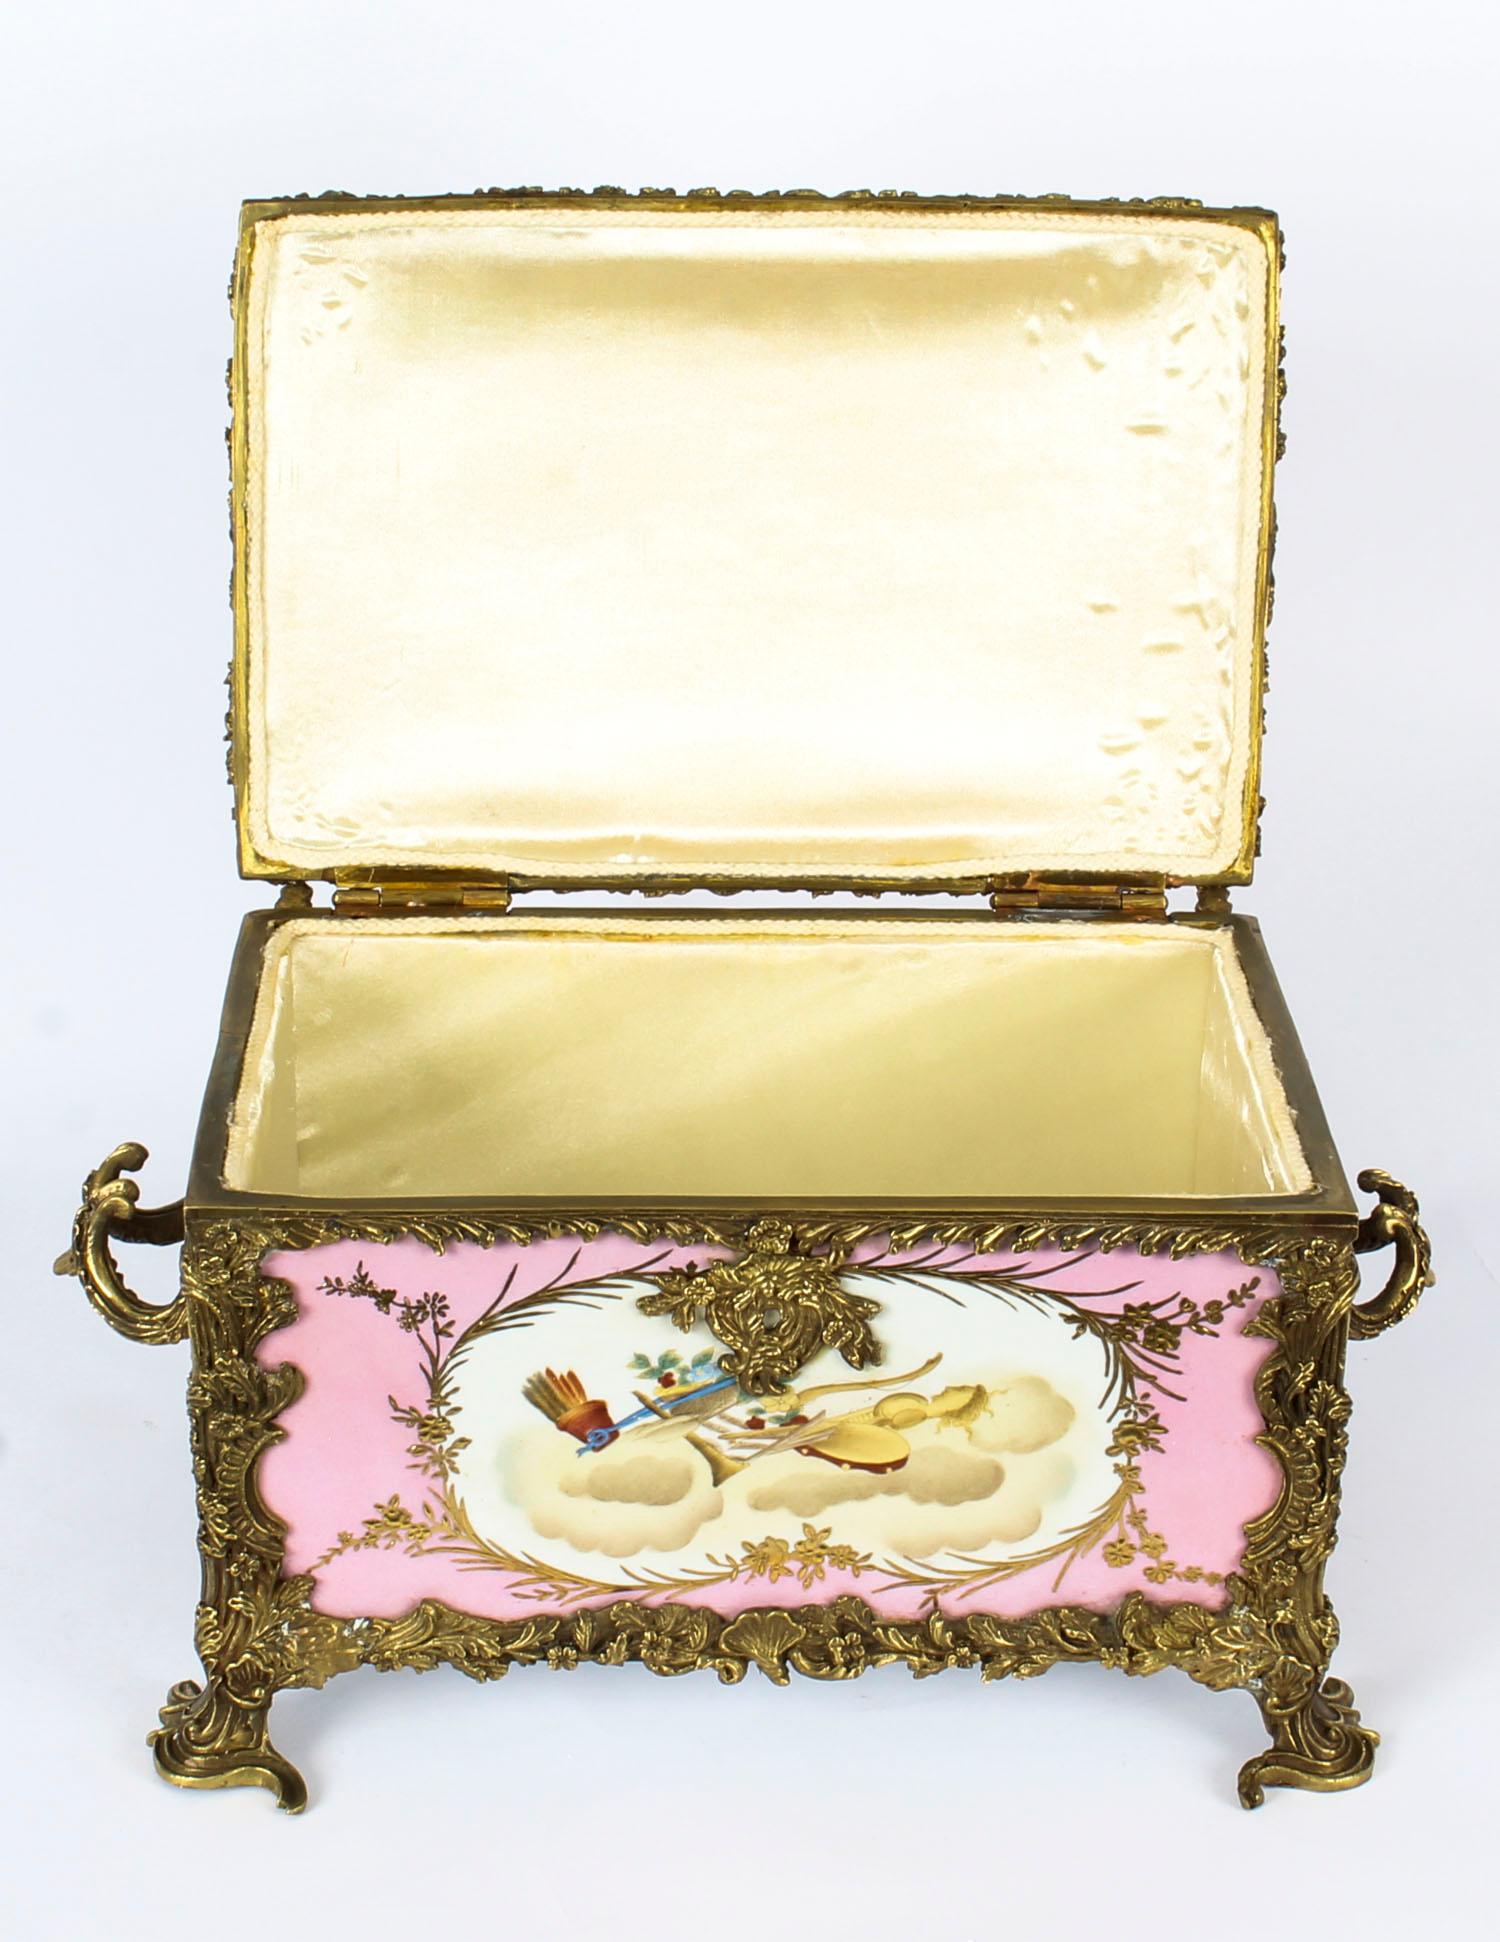 Vintage Large Russian Revival Rose Pink Porcelain Jewellery Casket 20th Century For Sale 2